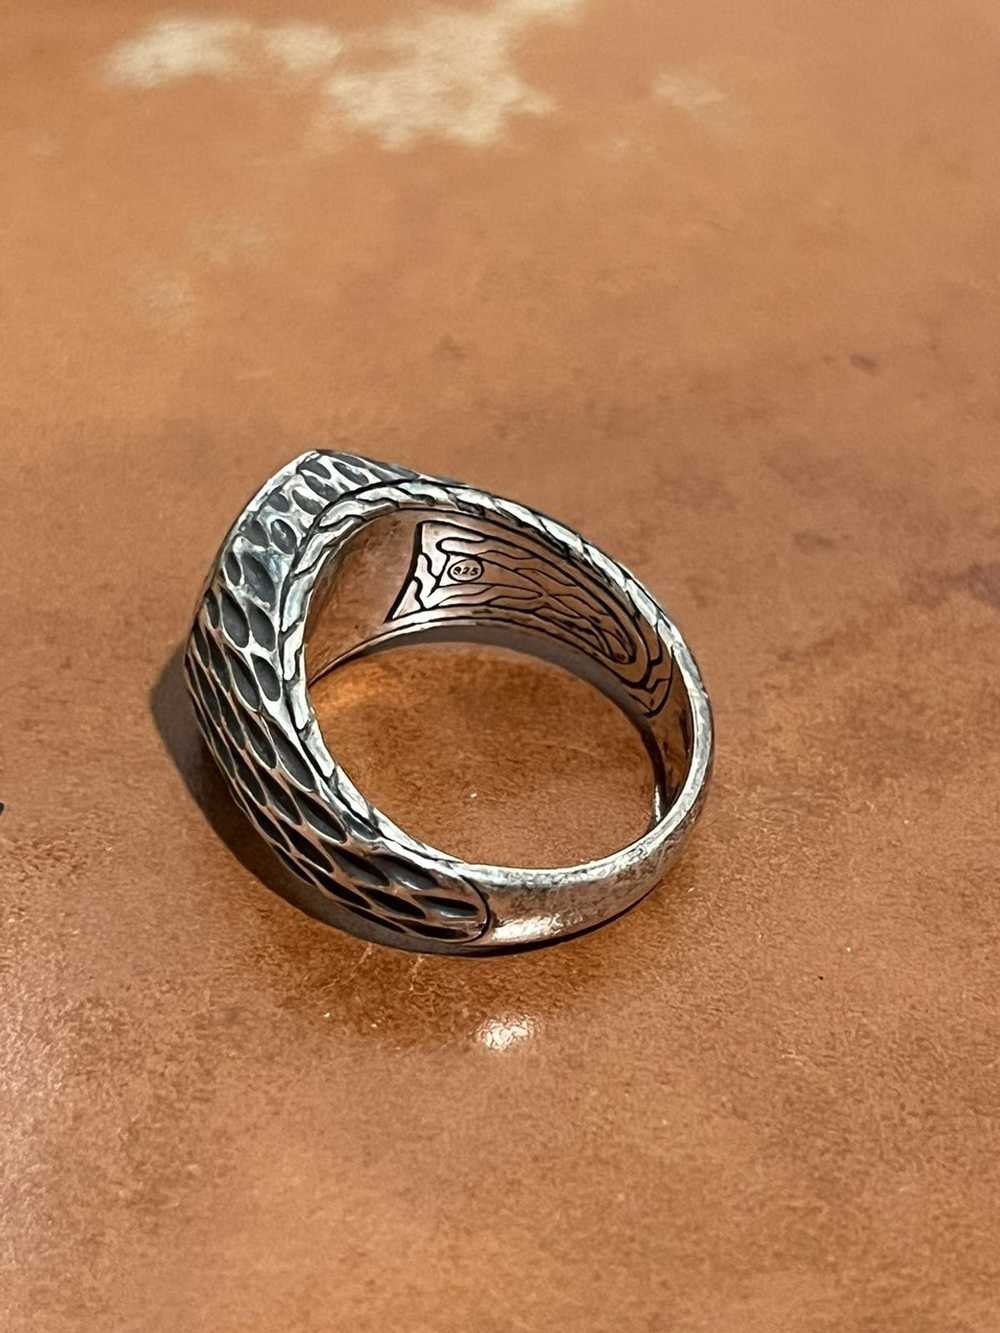 Designer John Hardy Legend Naga Ring - image 2